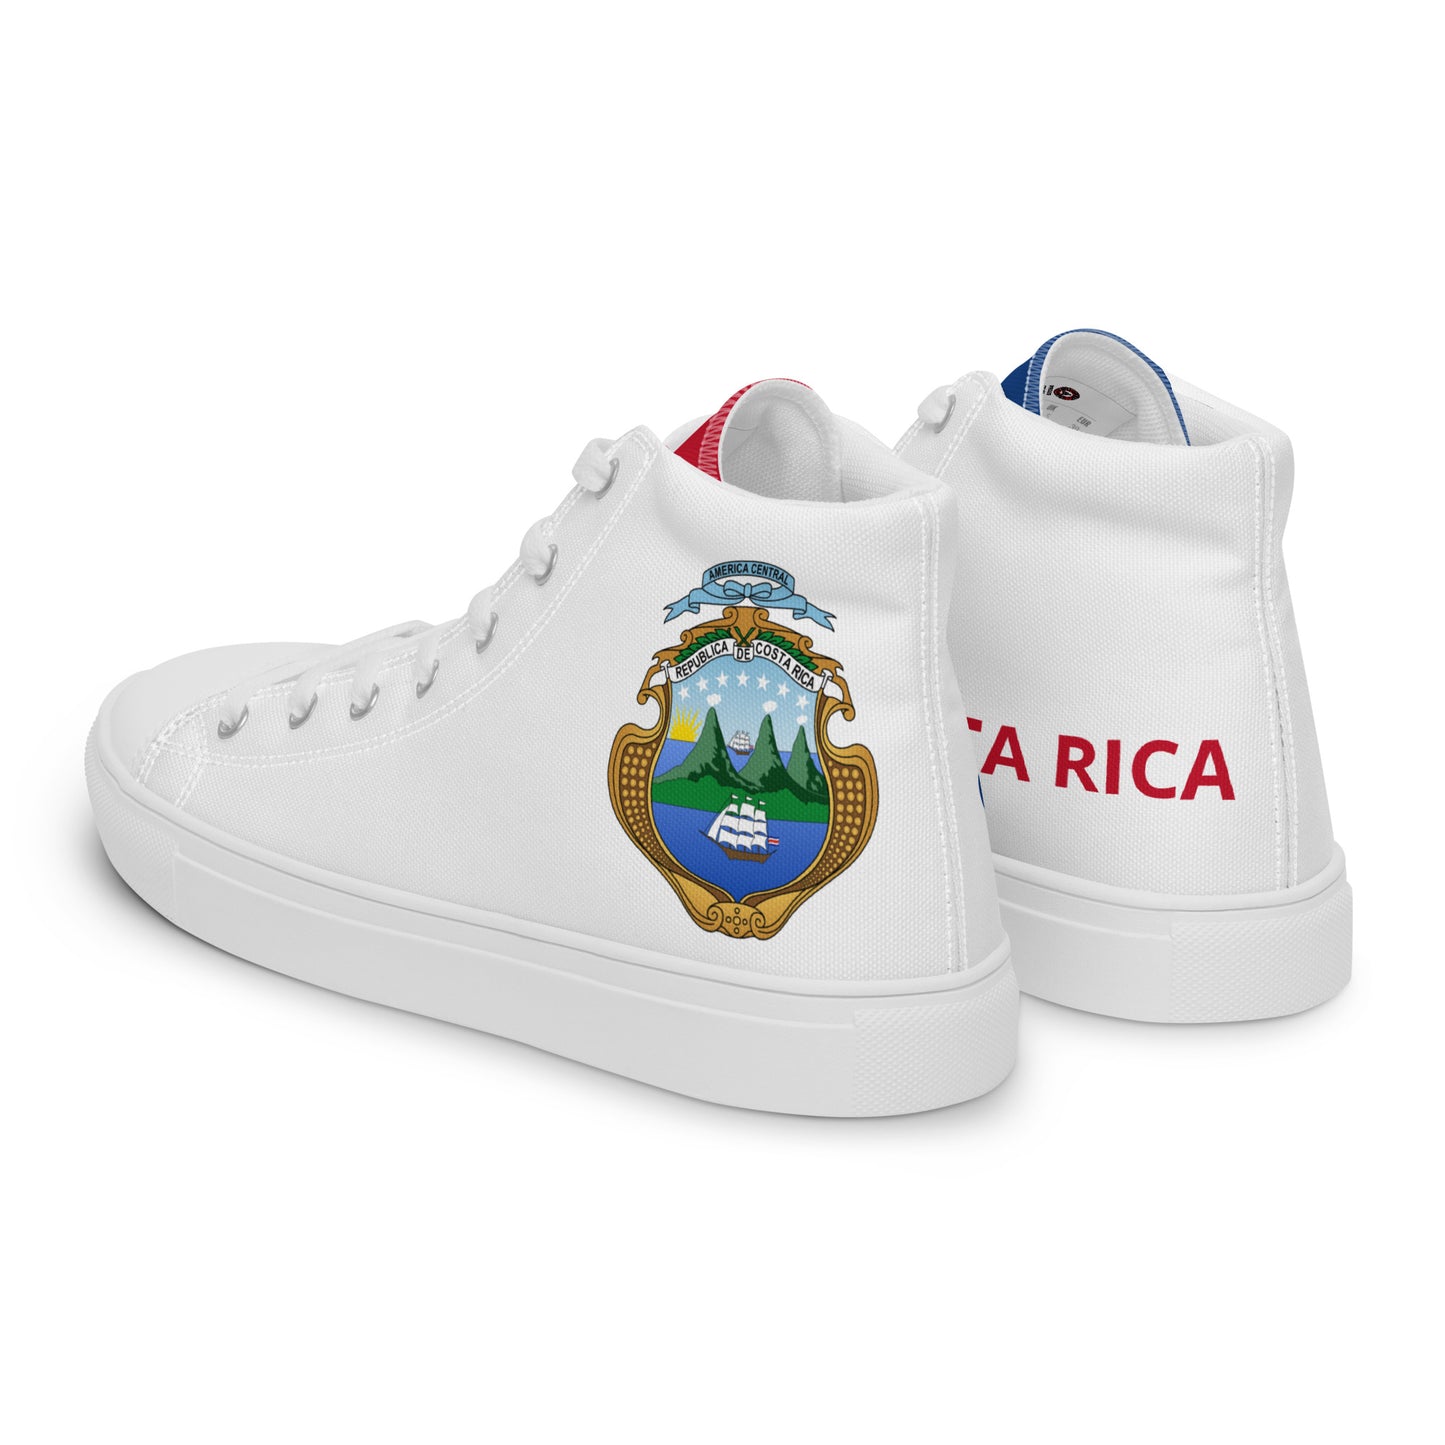 Costa Rica - Men - White - High top shoes